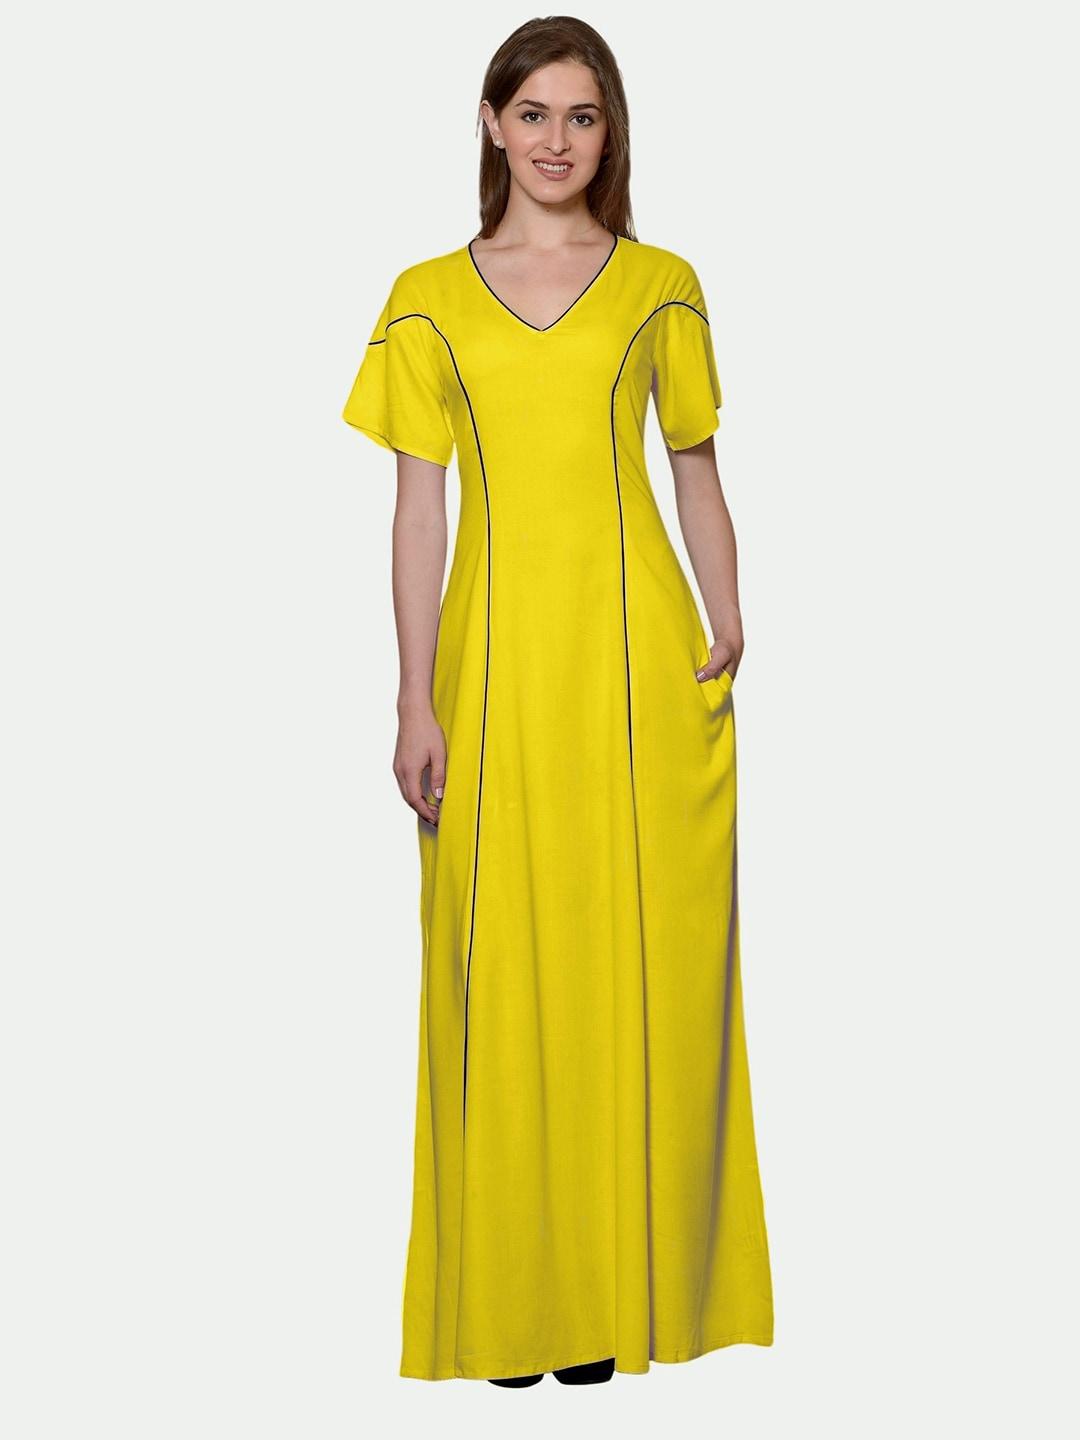 patrorna-yellow-maxi-nightdress